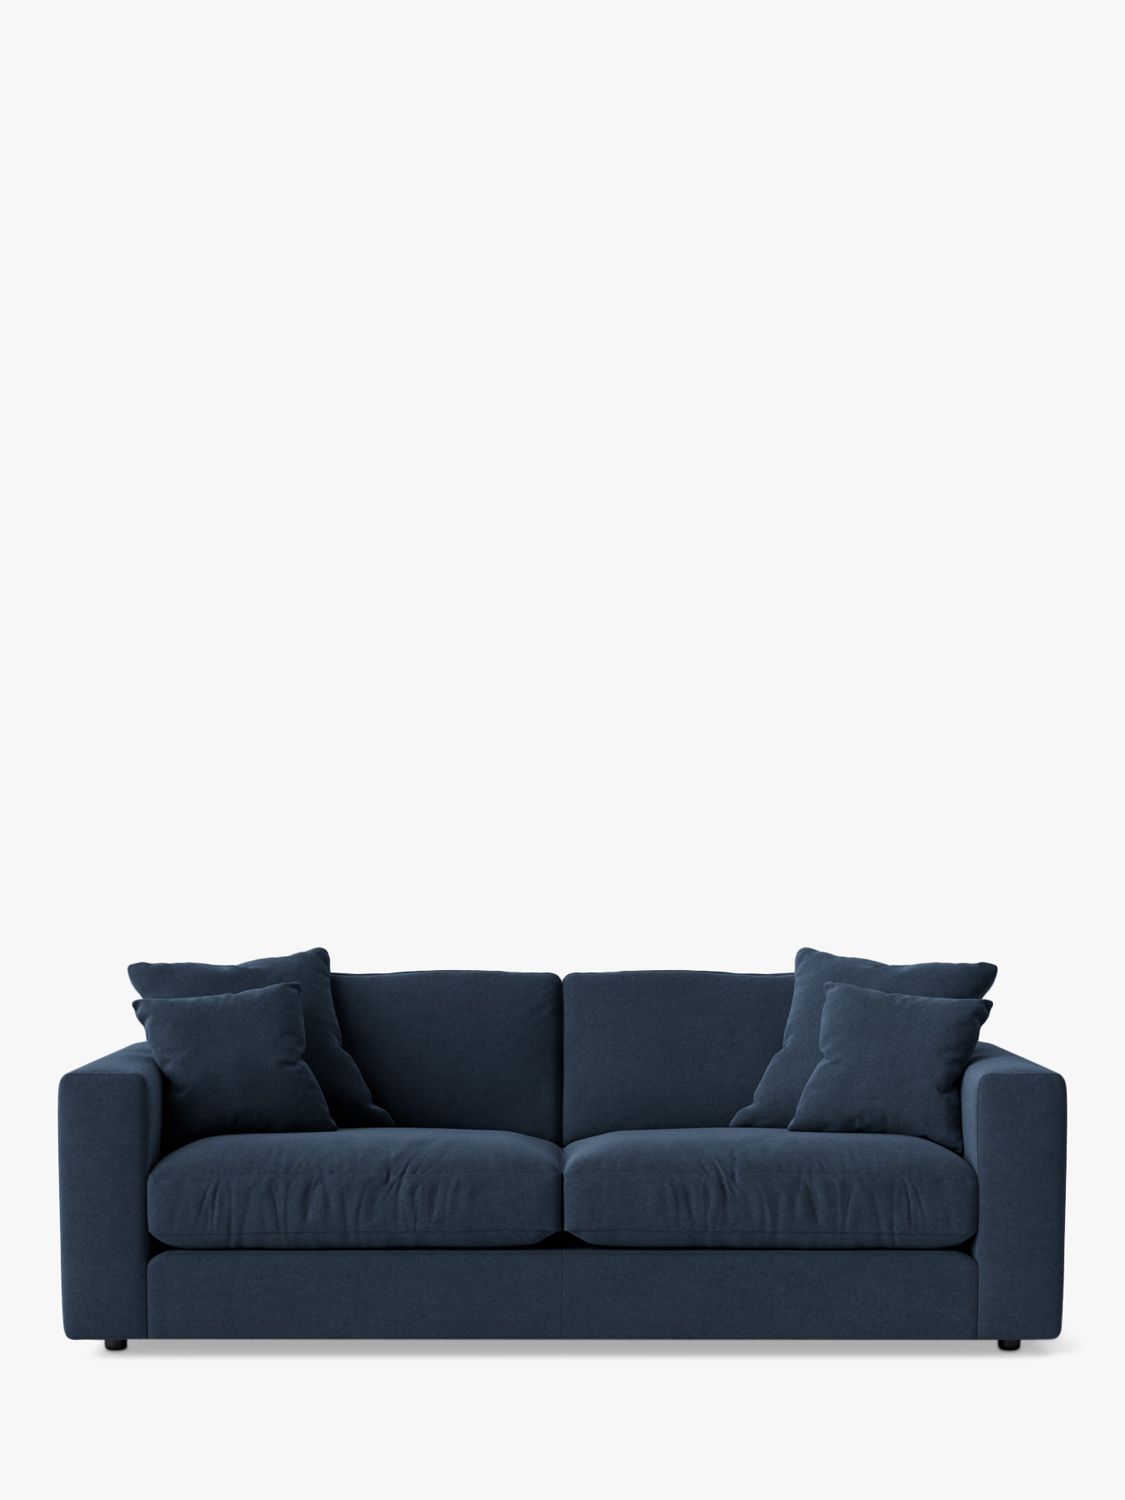 Althaea Range, Swoon Althaea Large 3 Seater Sofa, Smart Wool Indigo